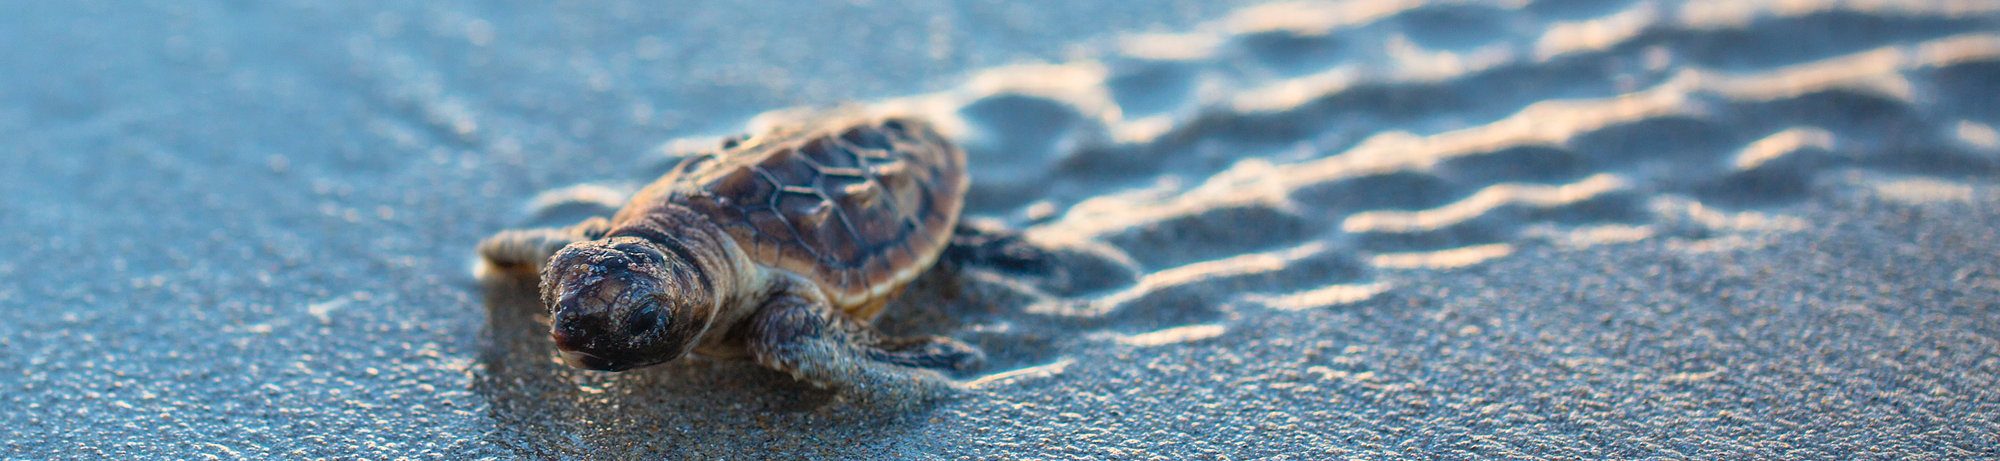 Baby Sea Turtle and Tracks on Sandy Beach